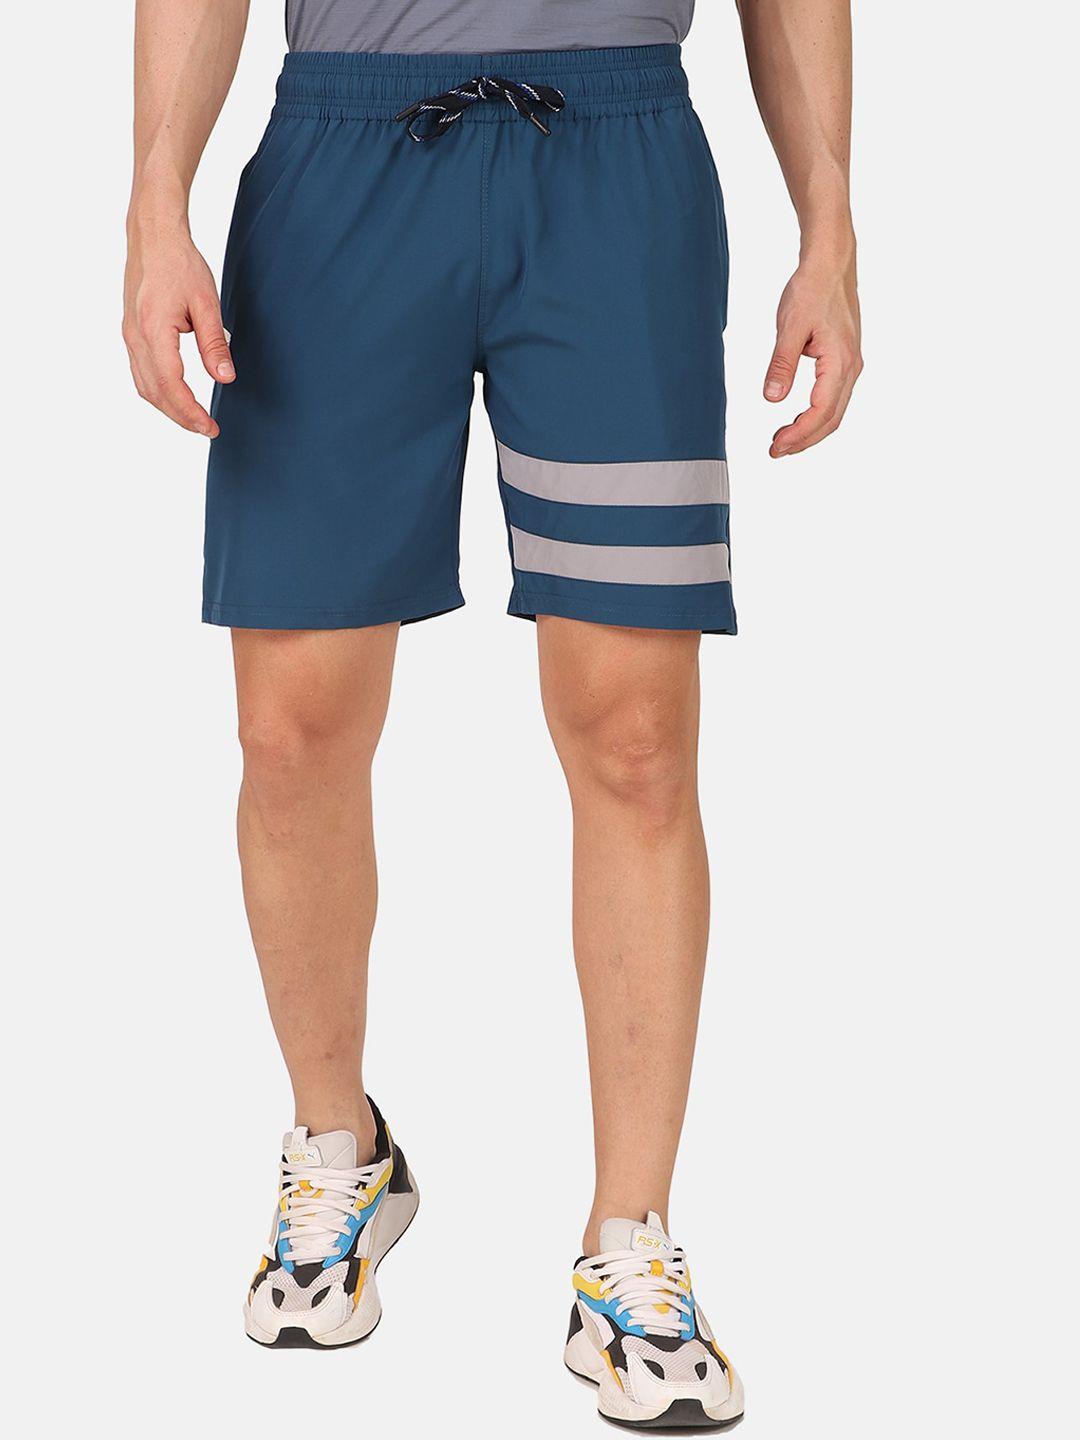 fitinc men blue running sports shorts